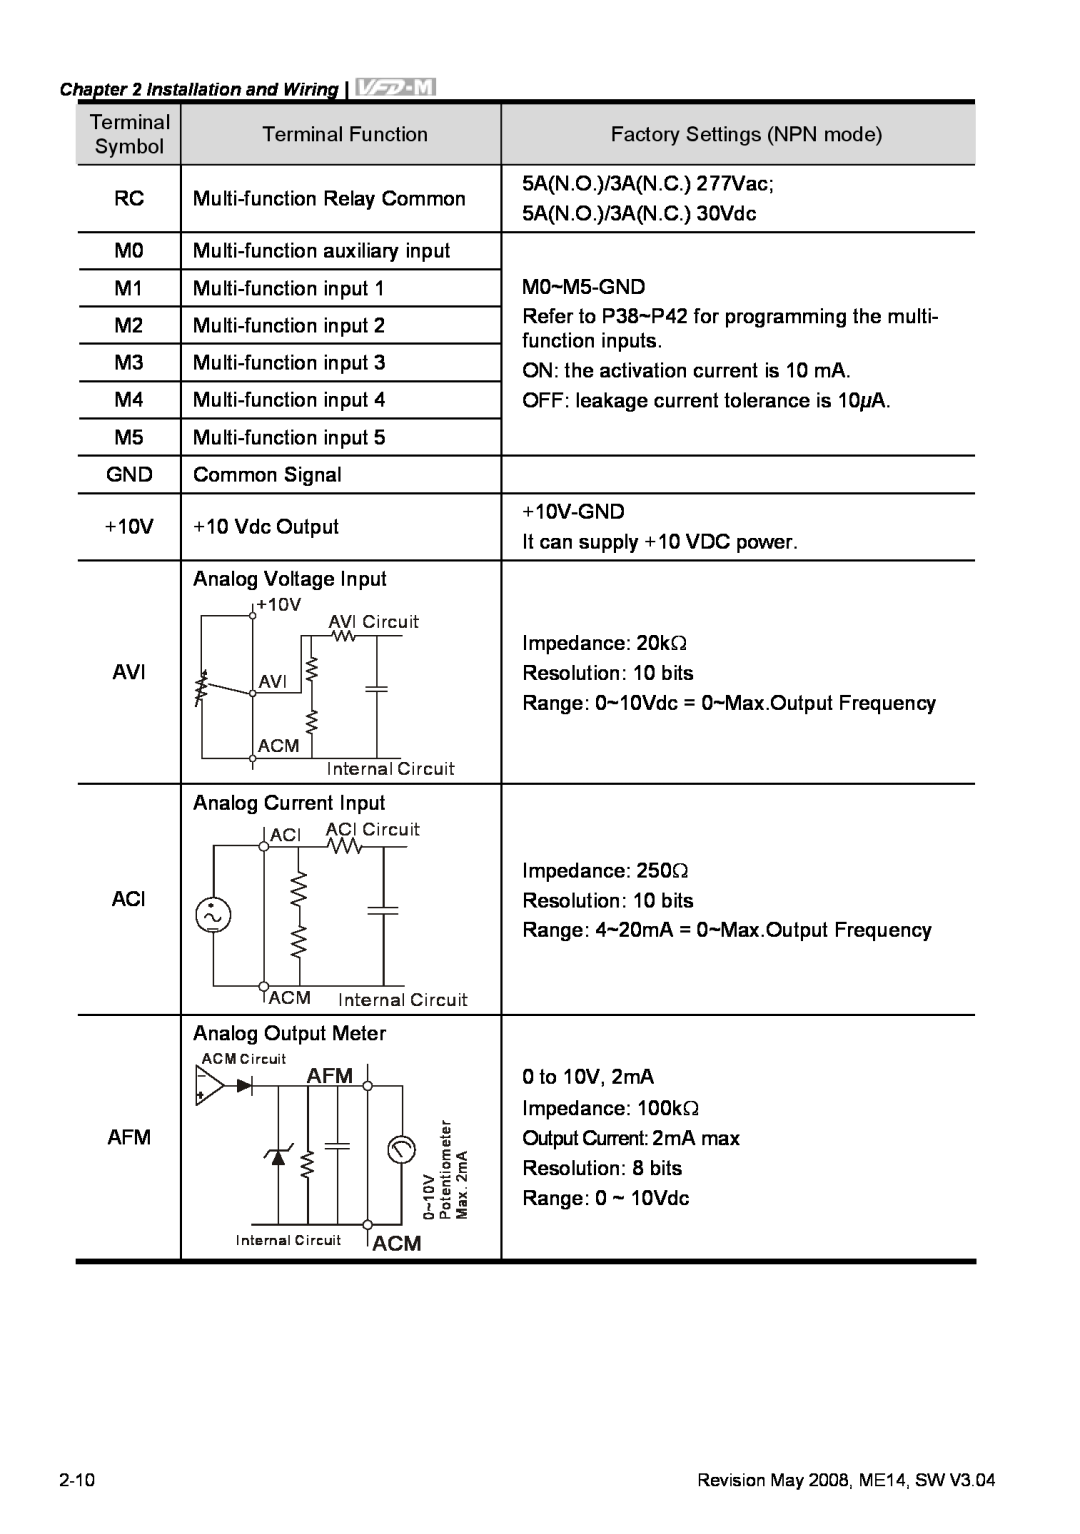 Delta Electronics VFD-M manual ACM Circuit AFM, Internal Circuit ACM, 0~10V Potentiometer 2mAMax 